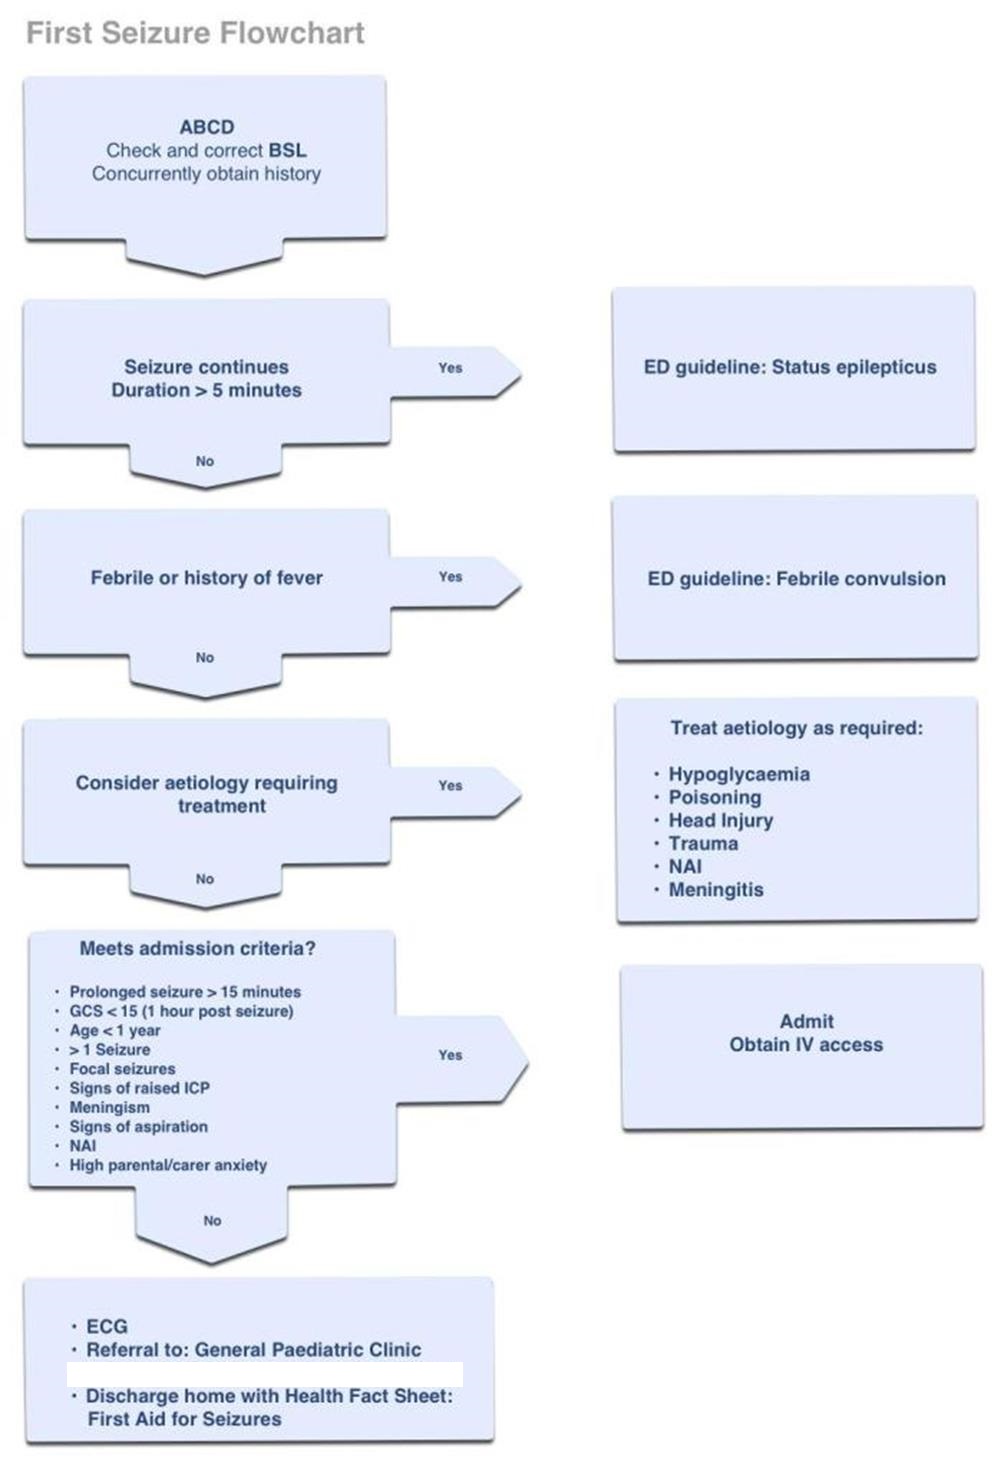 Management of first seizure flowchart. Click to enlarge.